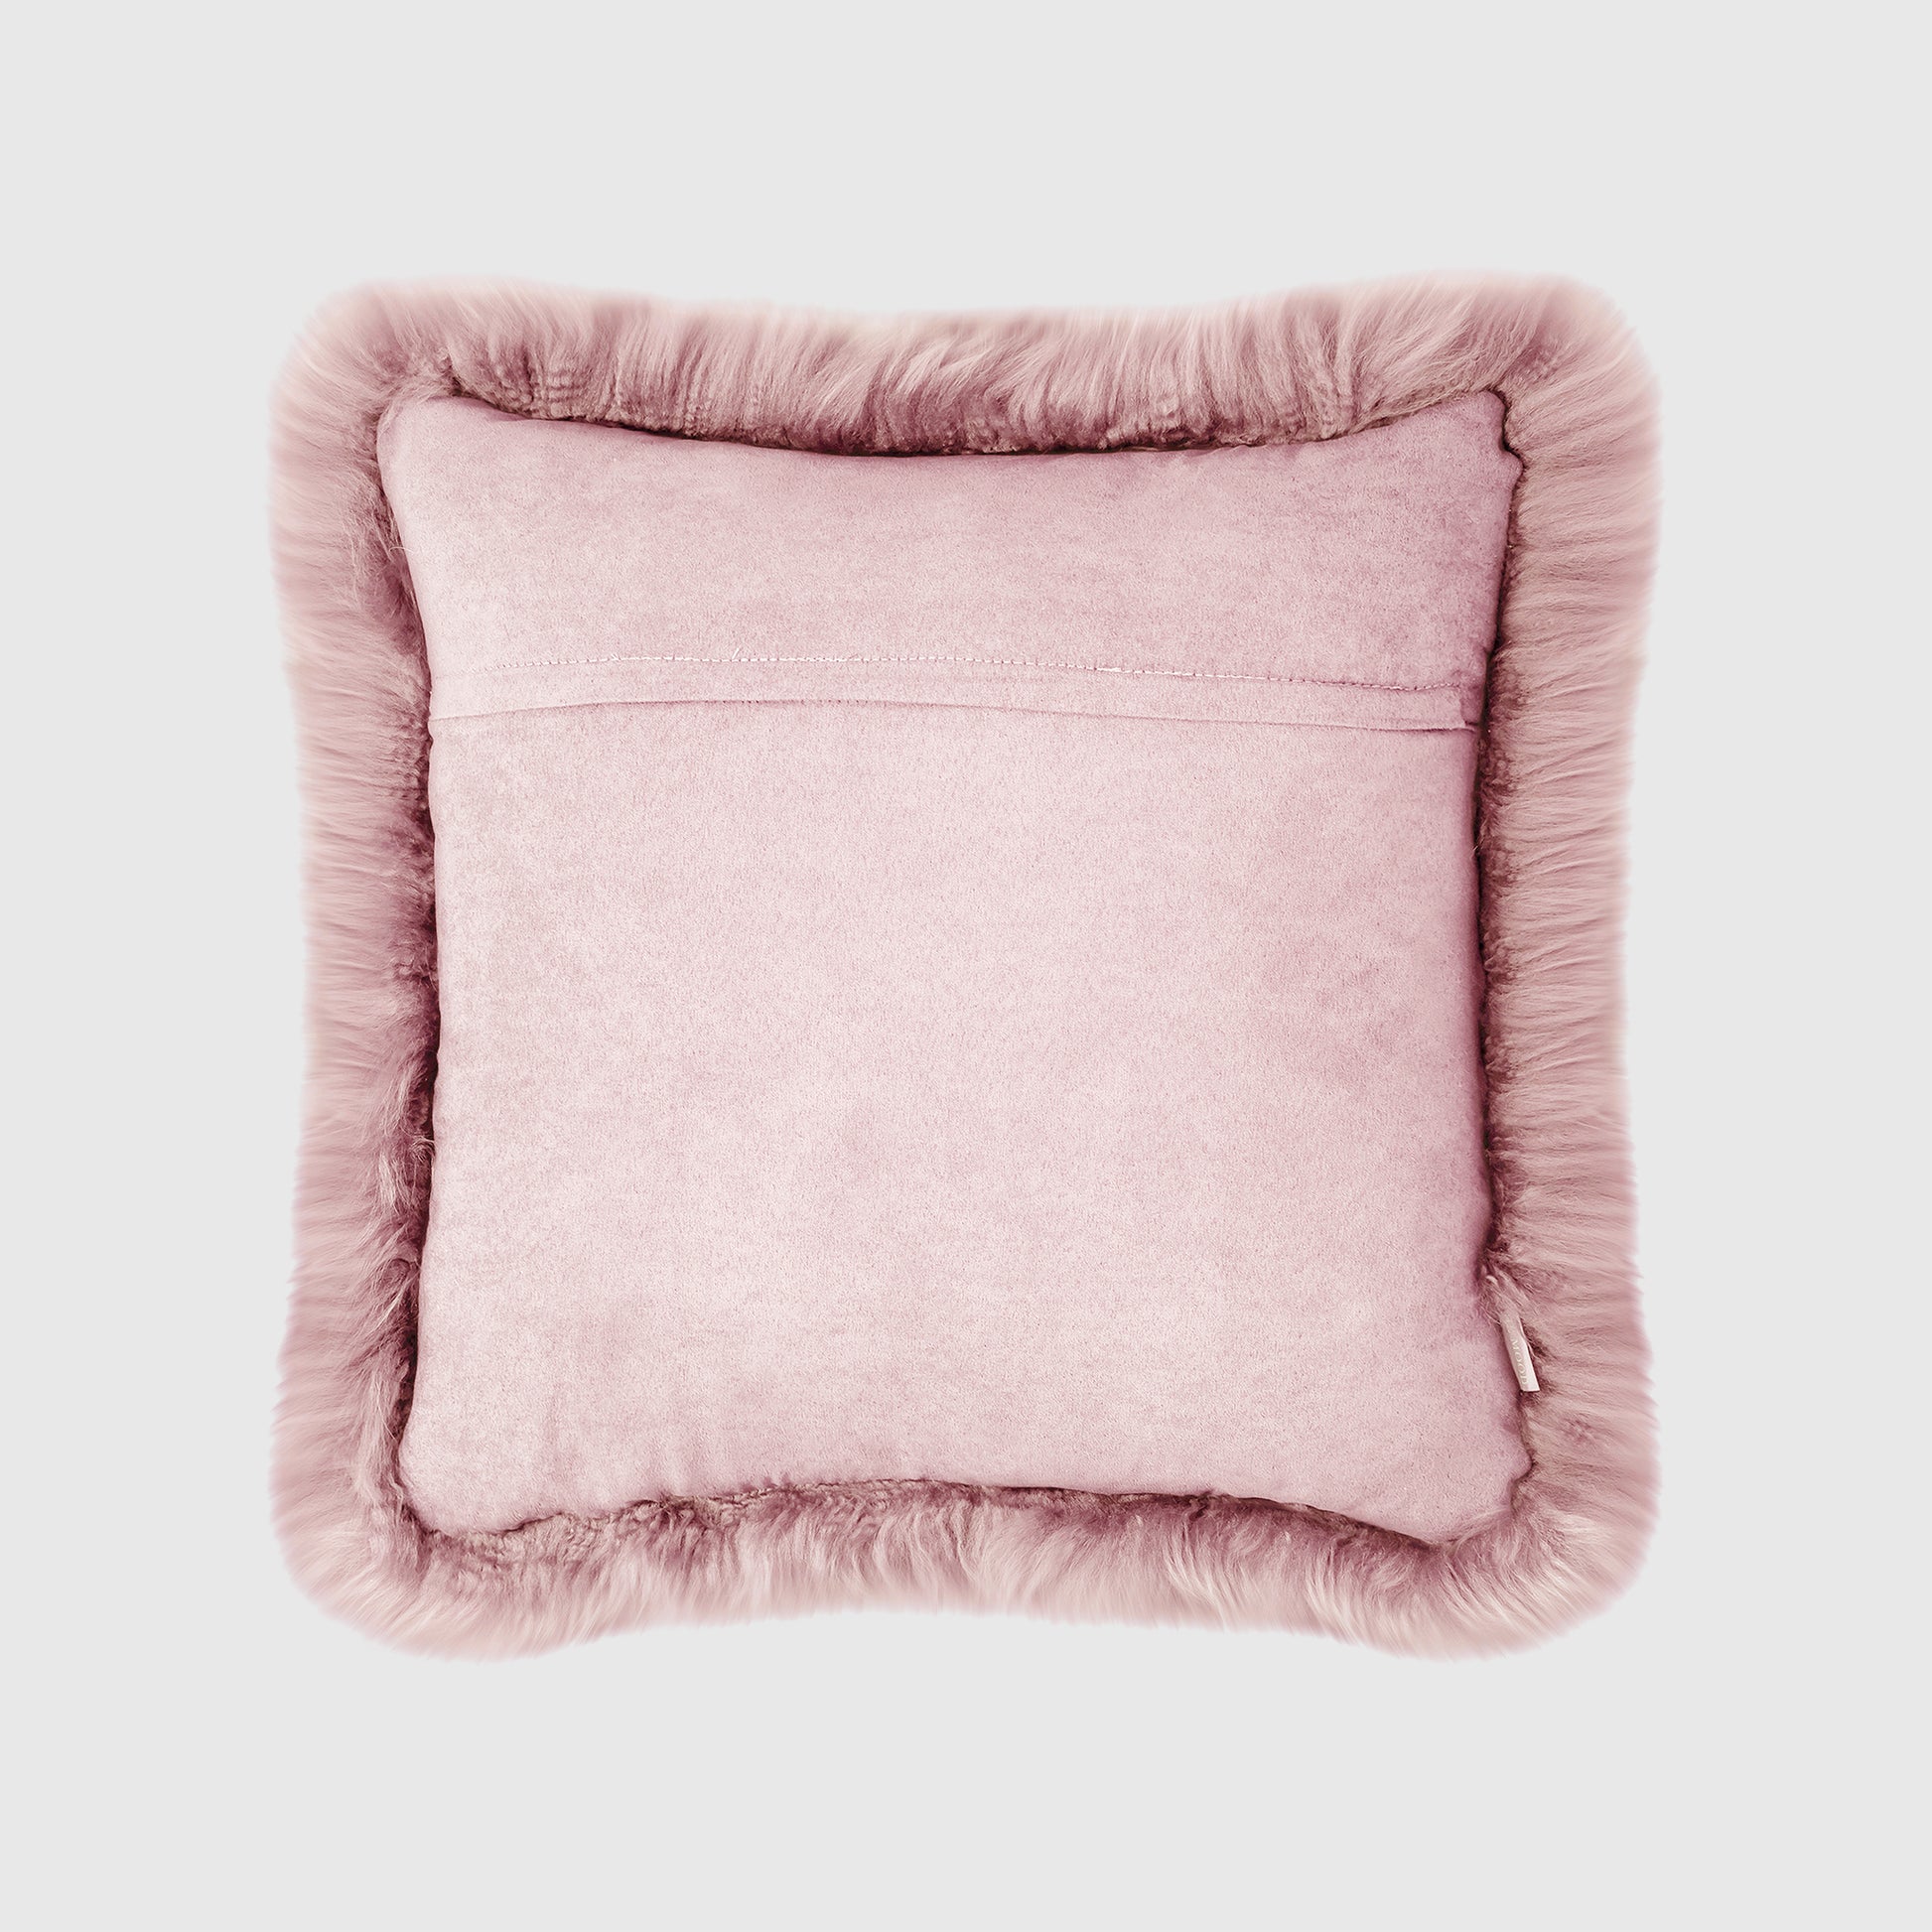 The Mood | Charlie Sheepskin 20”x20” Pillow, Rosa